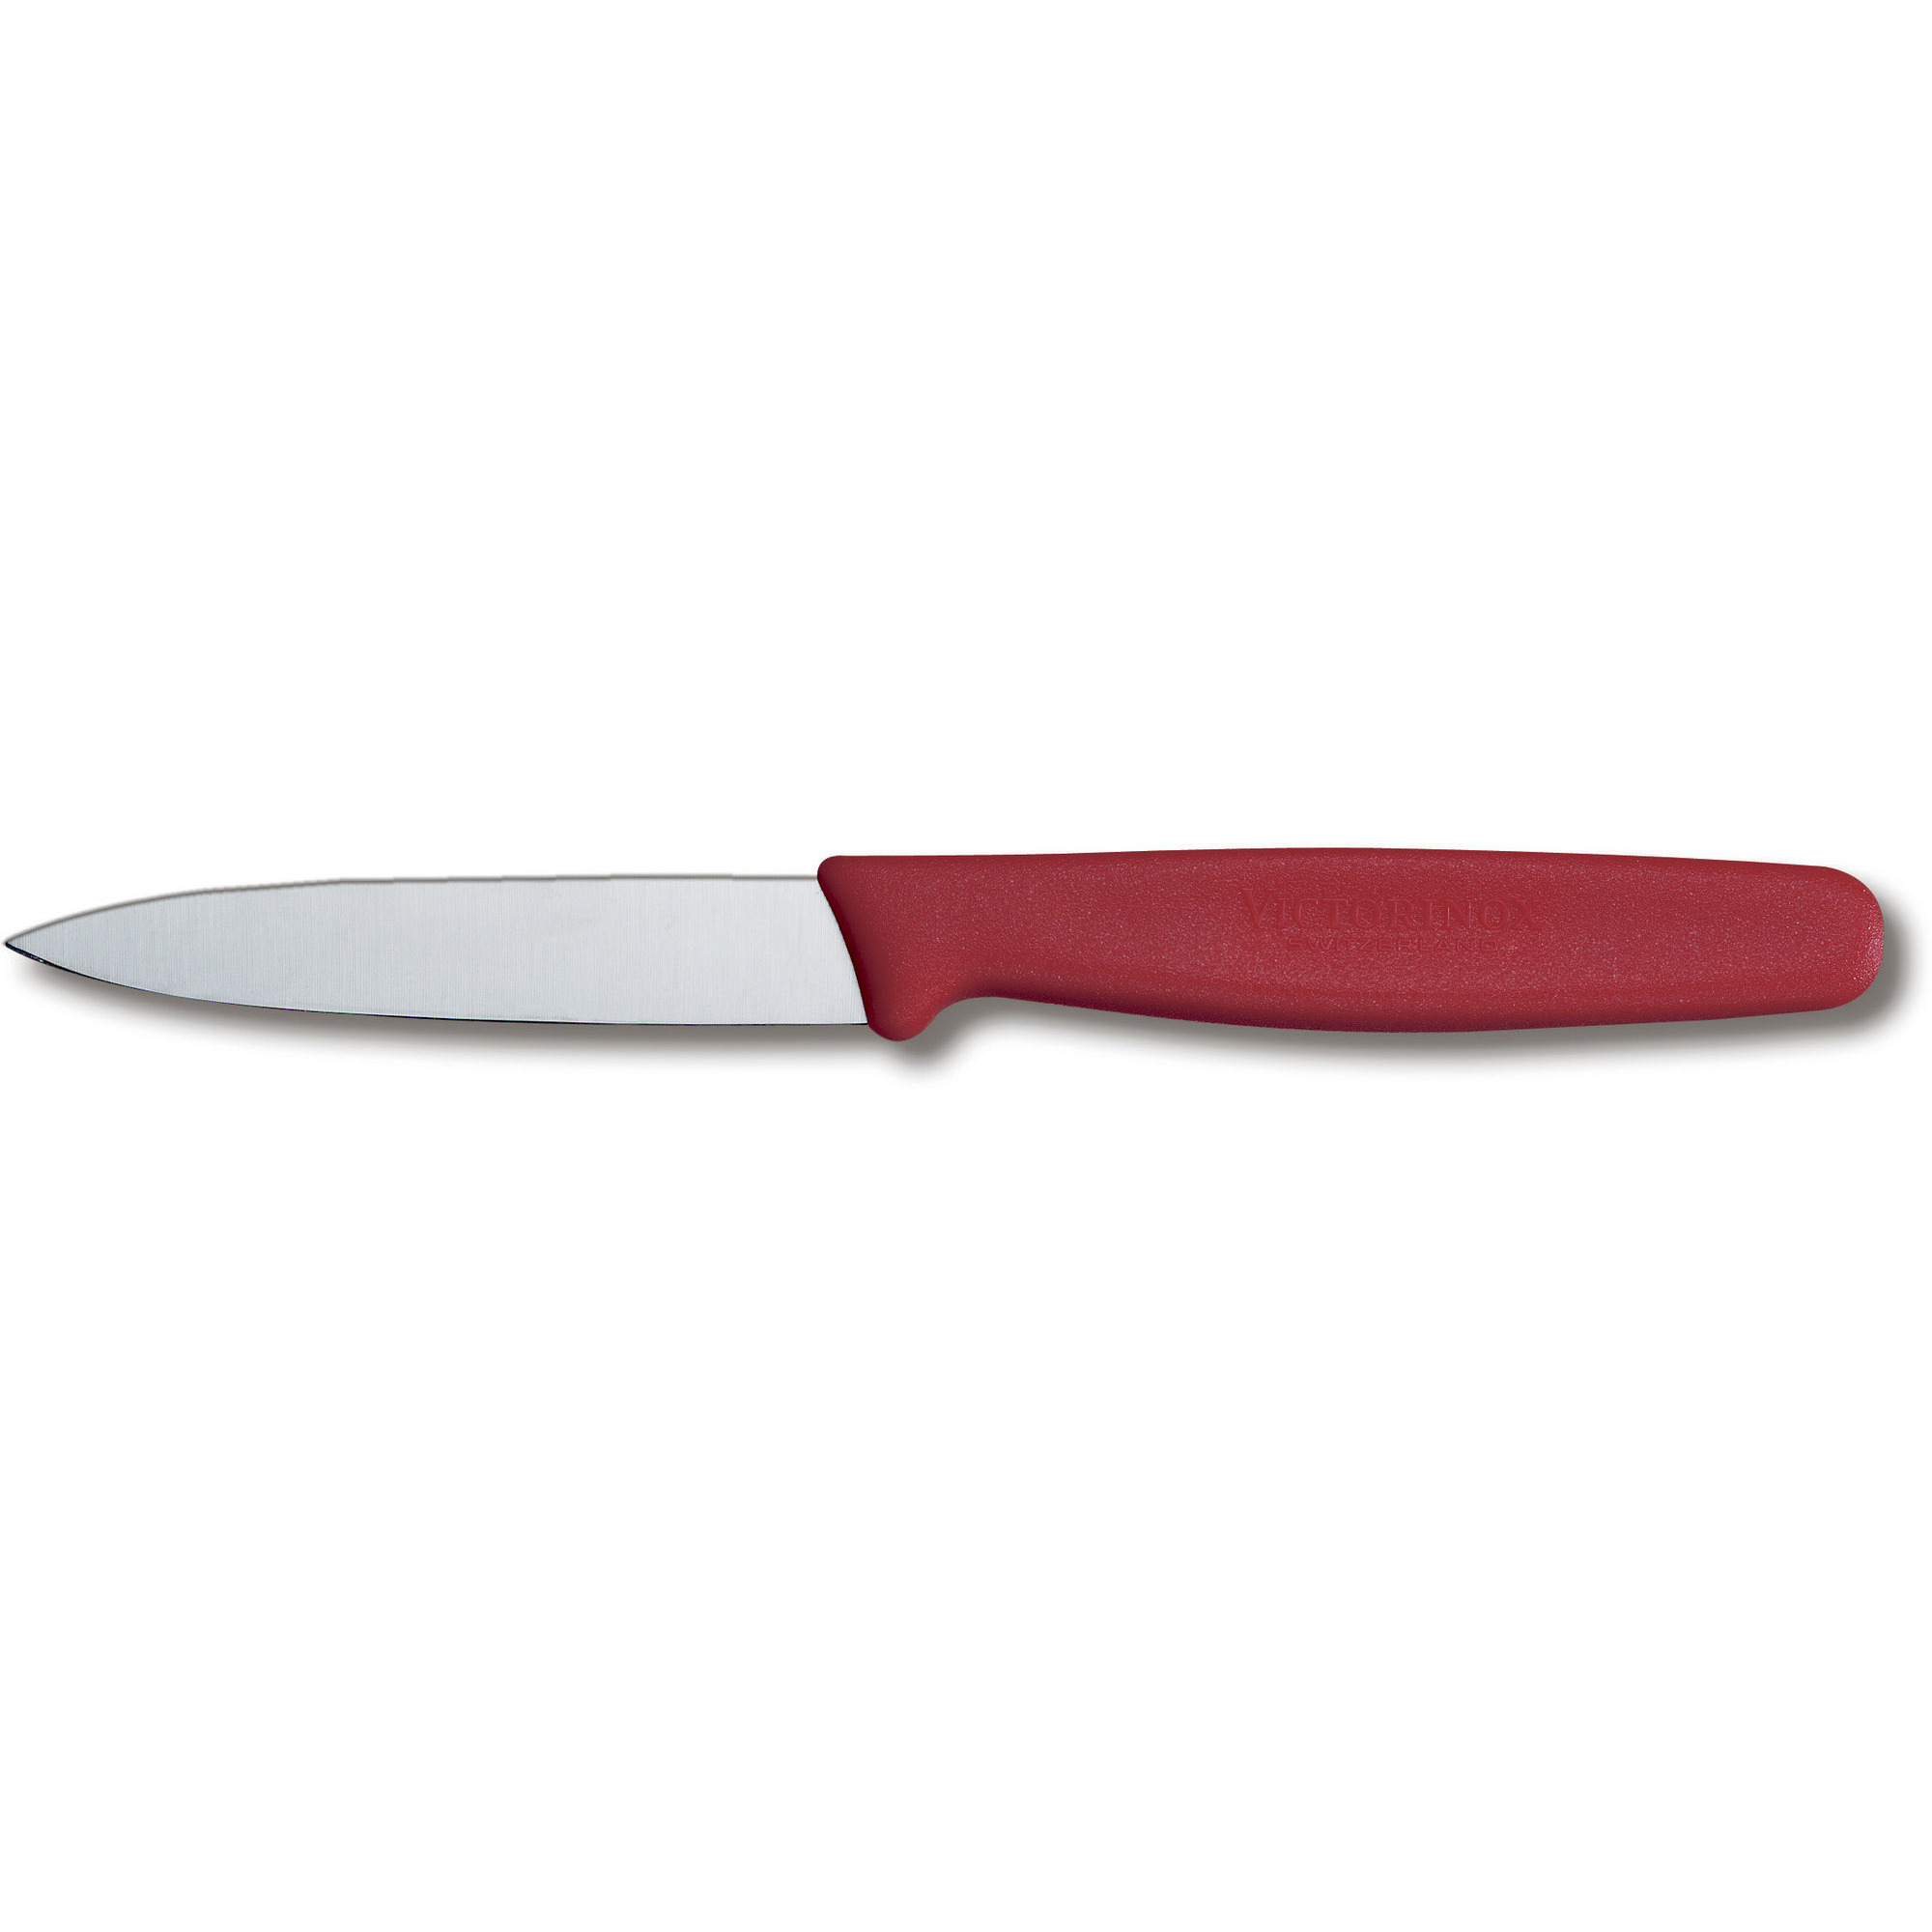 Victorinox Spids urtekniv med nylonskæfte i rød 8cm.